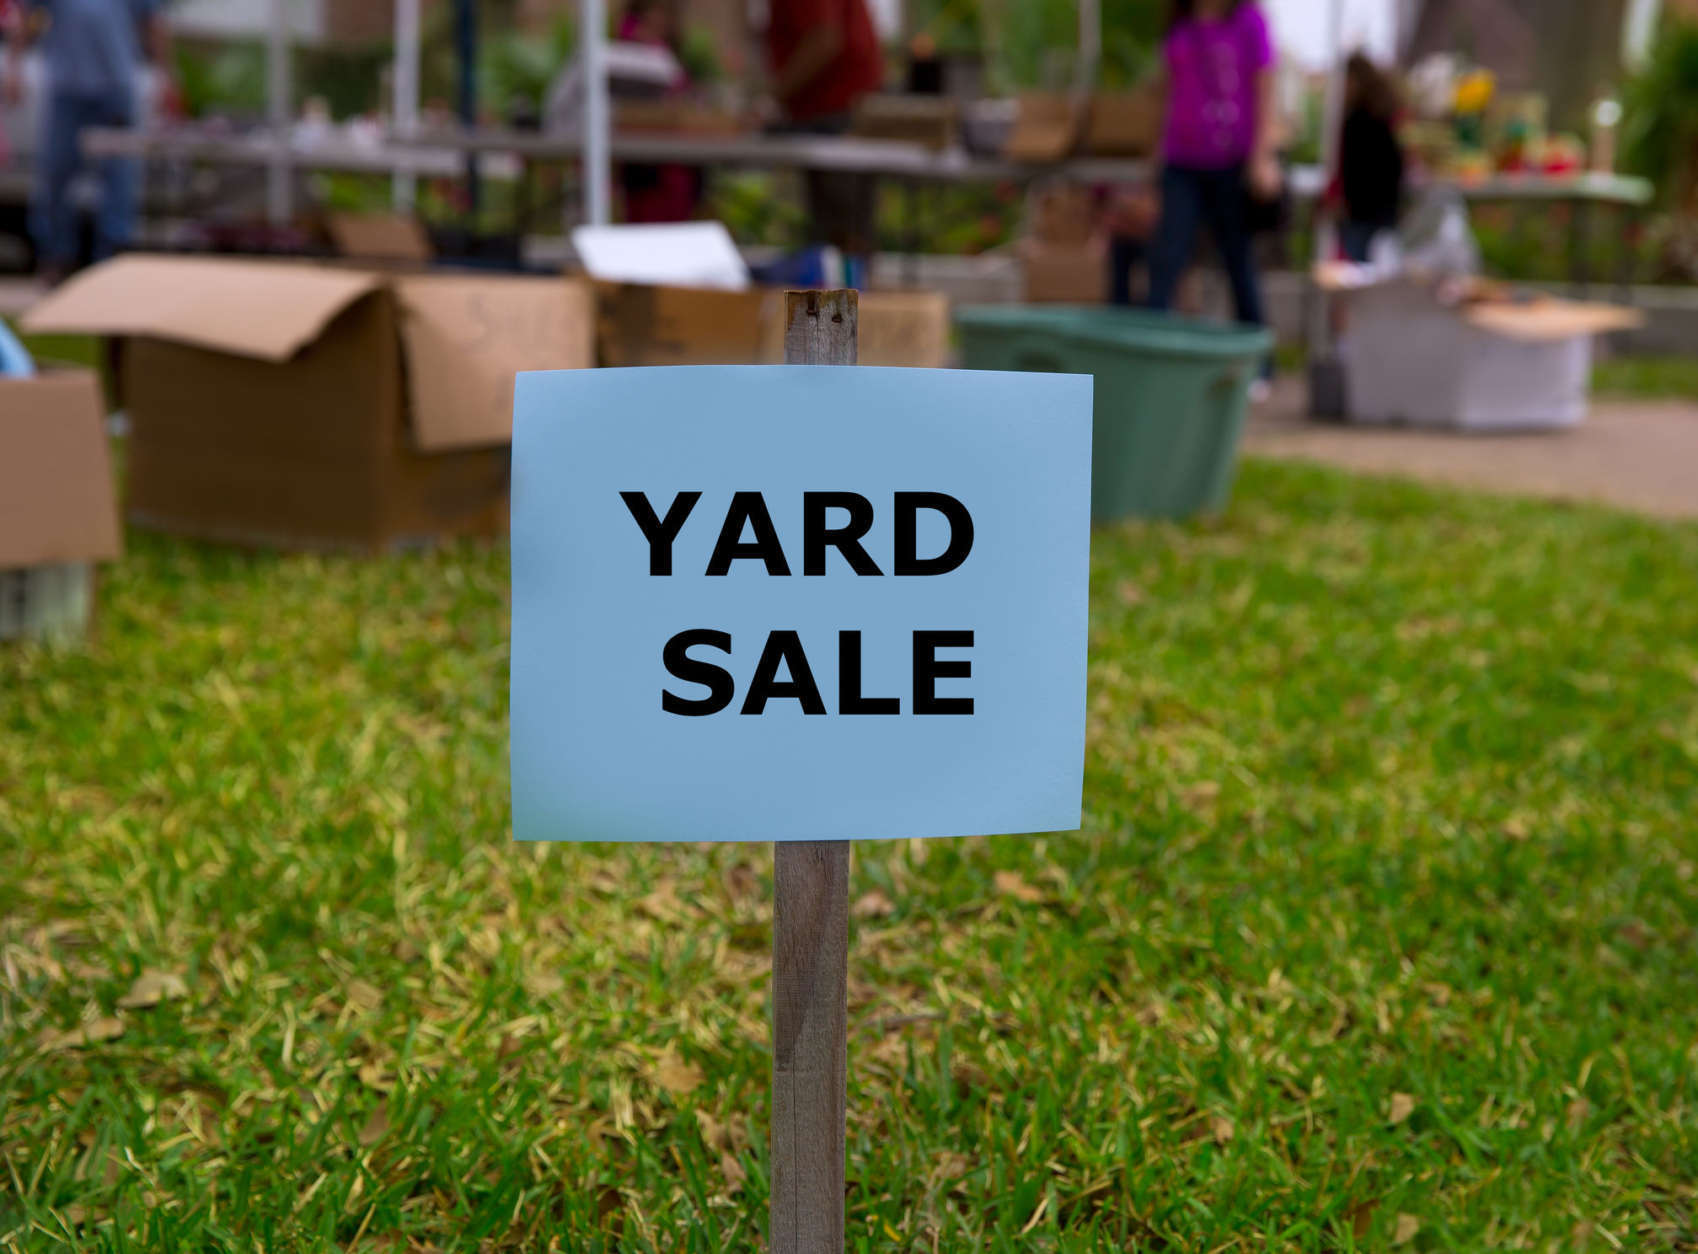 Yard sale in an american weekend on the green lawn